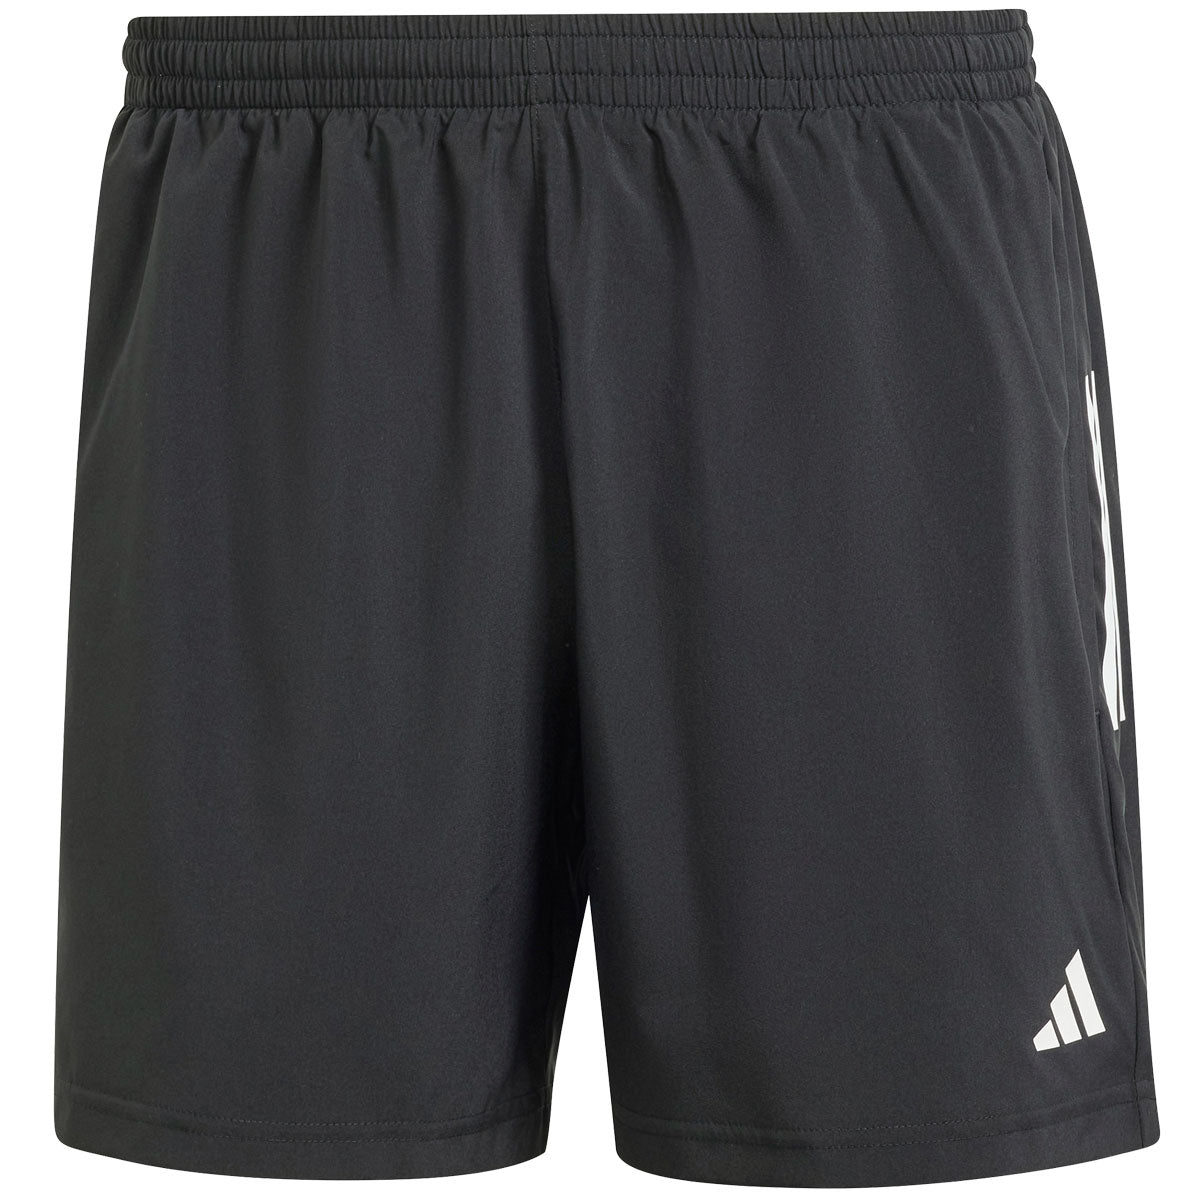 adidas Own The Run 5 inch Shorts - Mens - Black